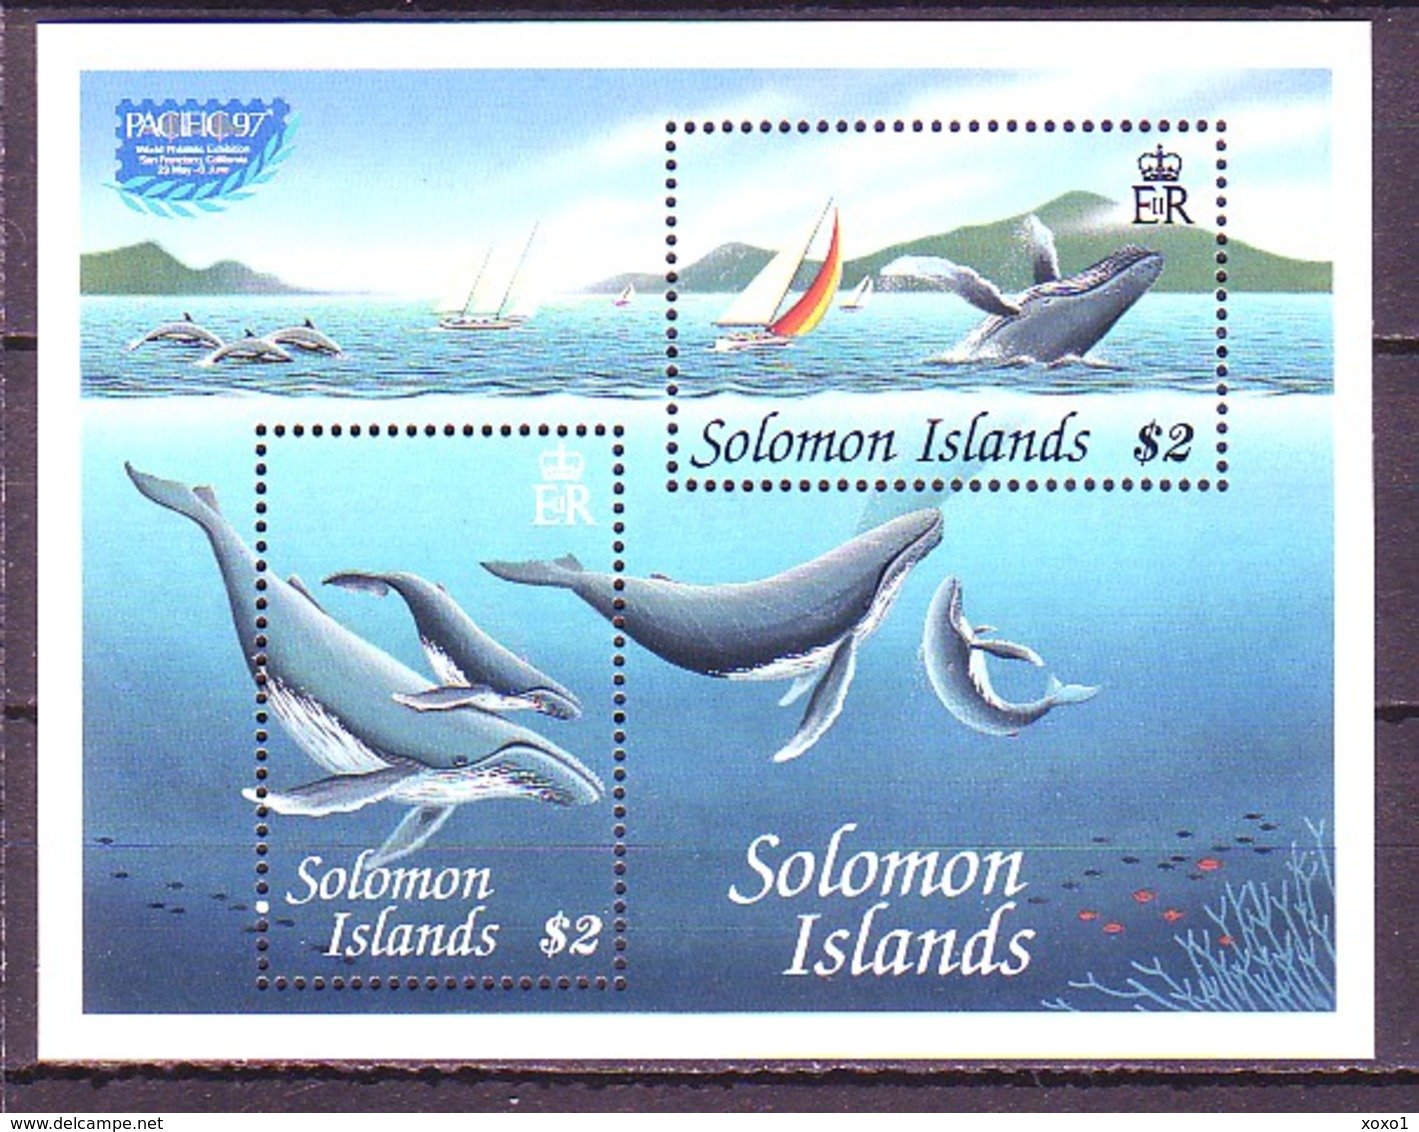 Solomon Islands 1997 MiNr. Block 48 Salomoninseln Humpback Whales PACIFIC ’97  S\sh MNH** 3,20 € - Wale